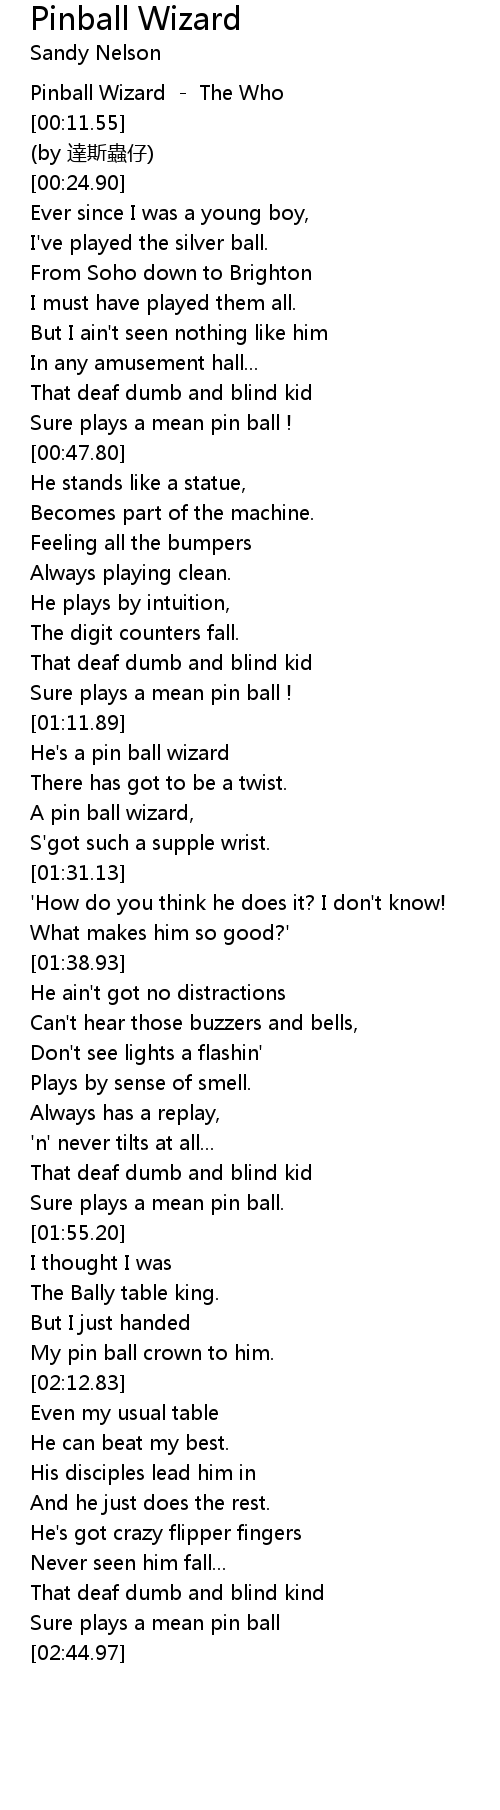 The Who - Pinball Wizard (Lyrics) 